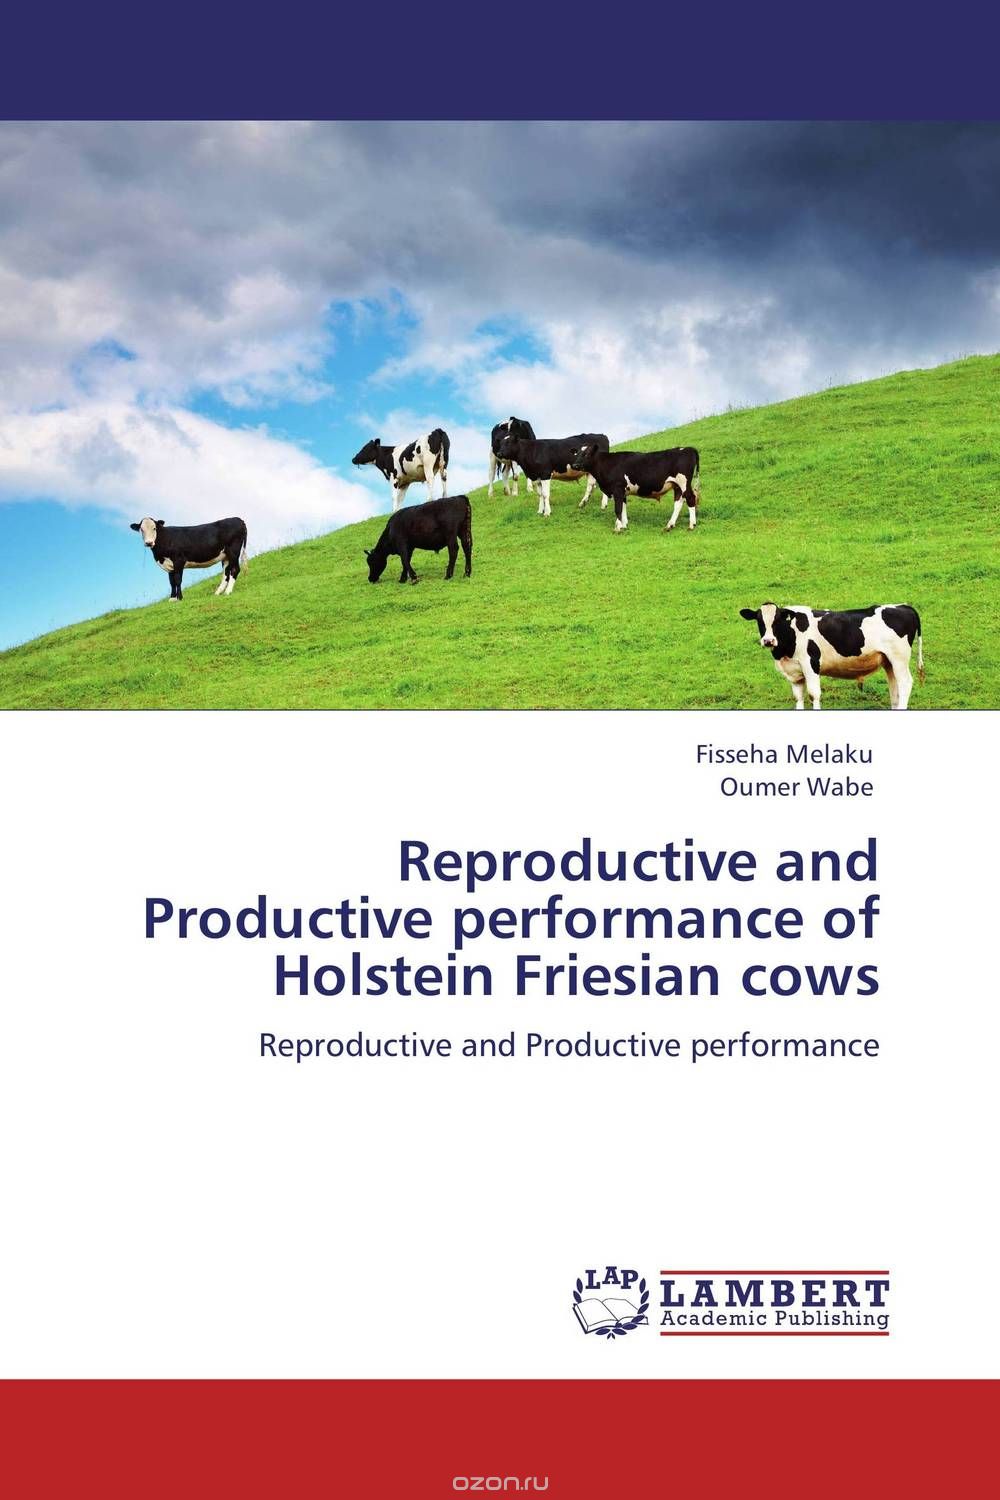 Скачать книгу "Reproductive and Productive performance of Holstein Friesian cows"